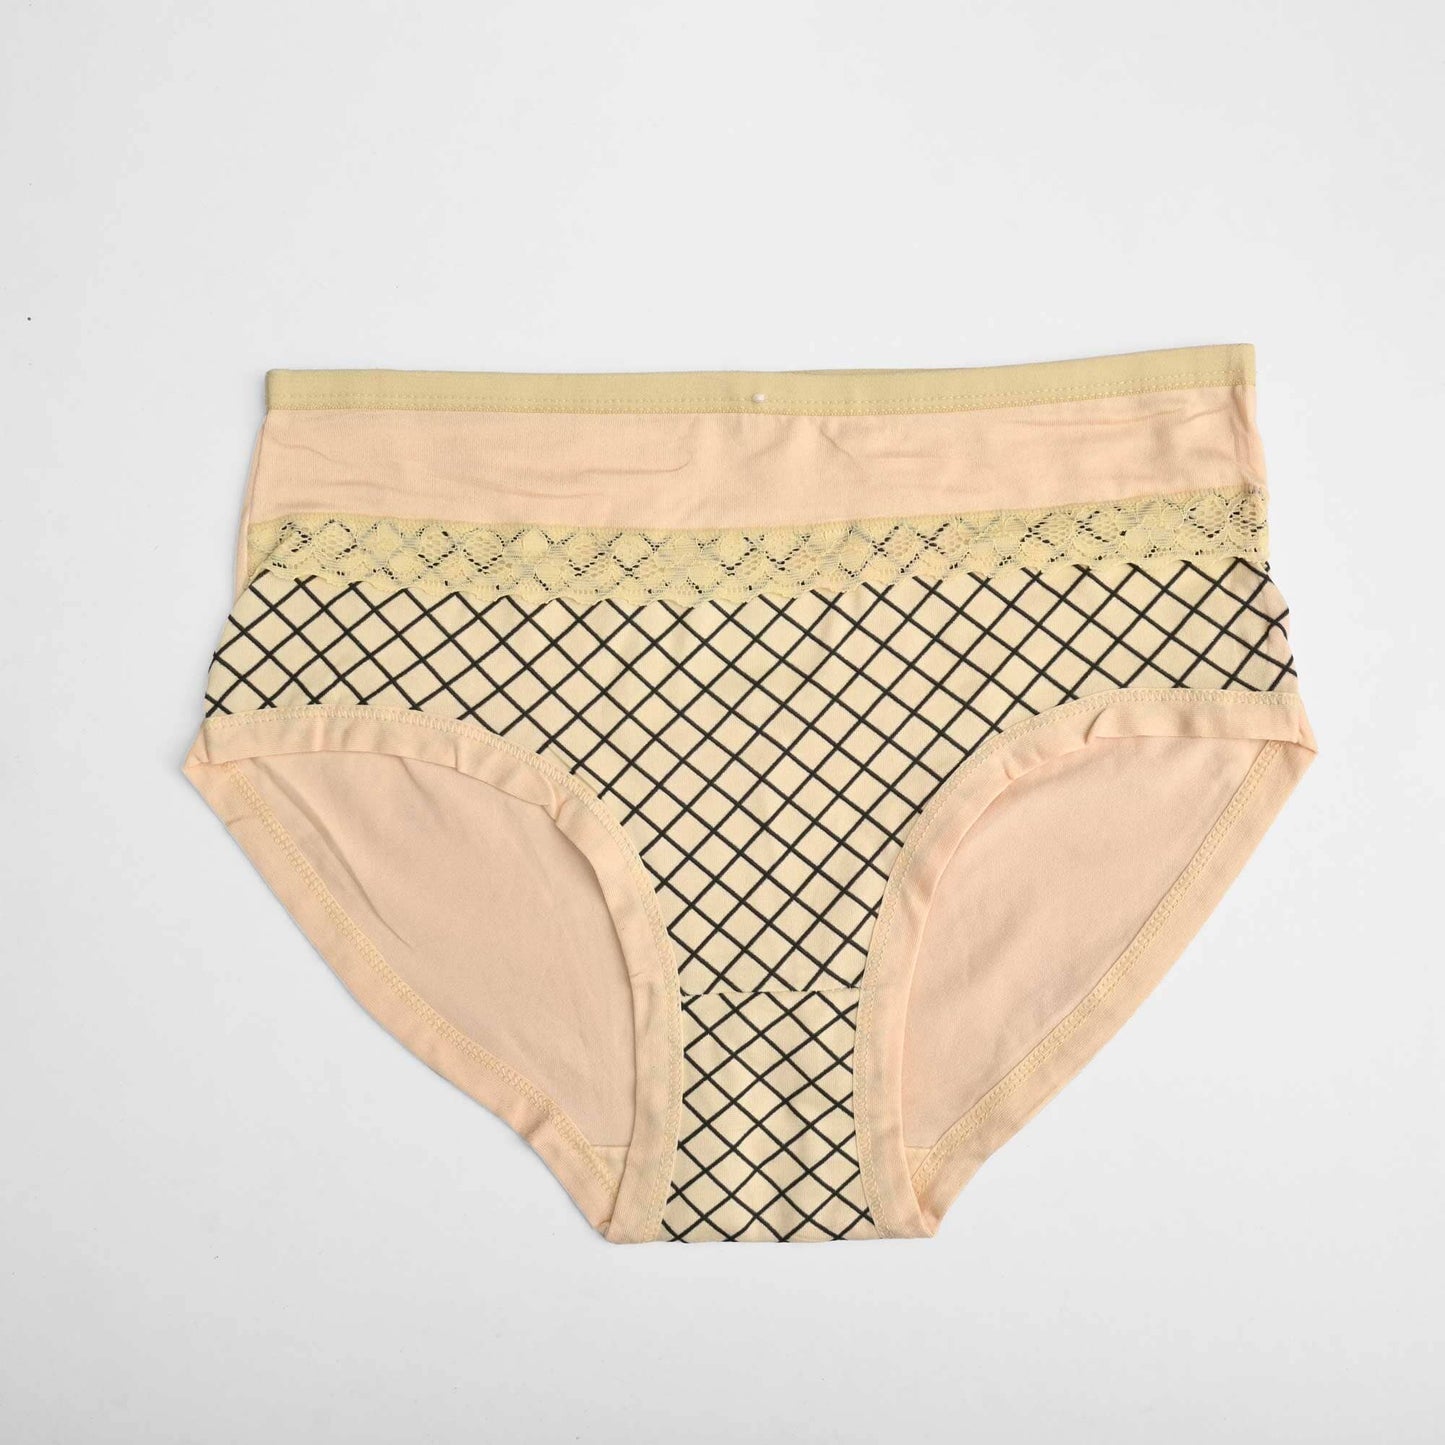 Shuifanxin Women's Lace Design Underwear Panties Women's Panties RAM Skin 30-34 inches 